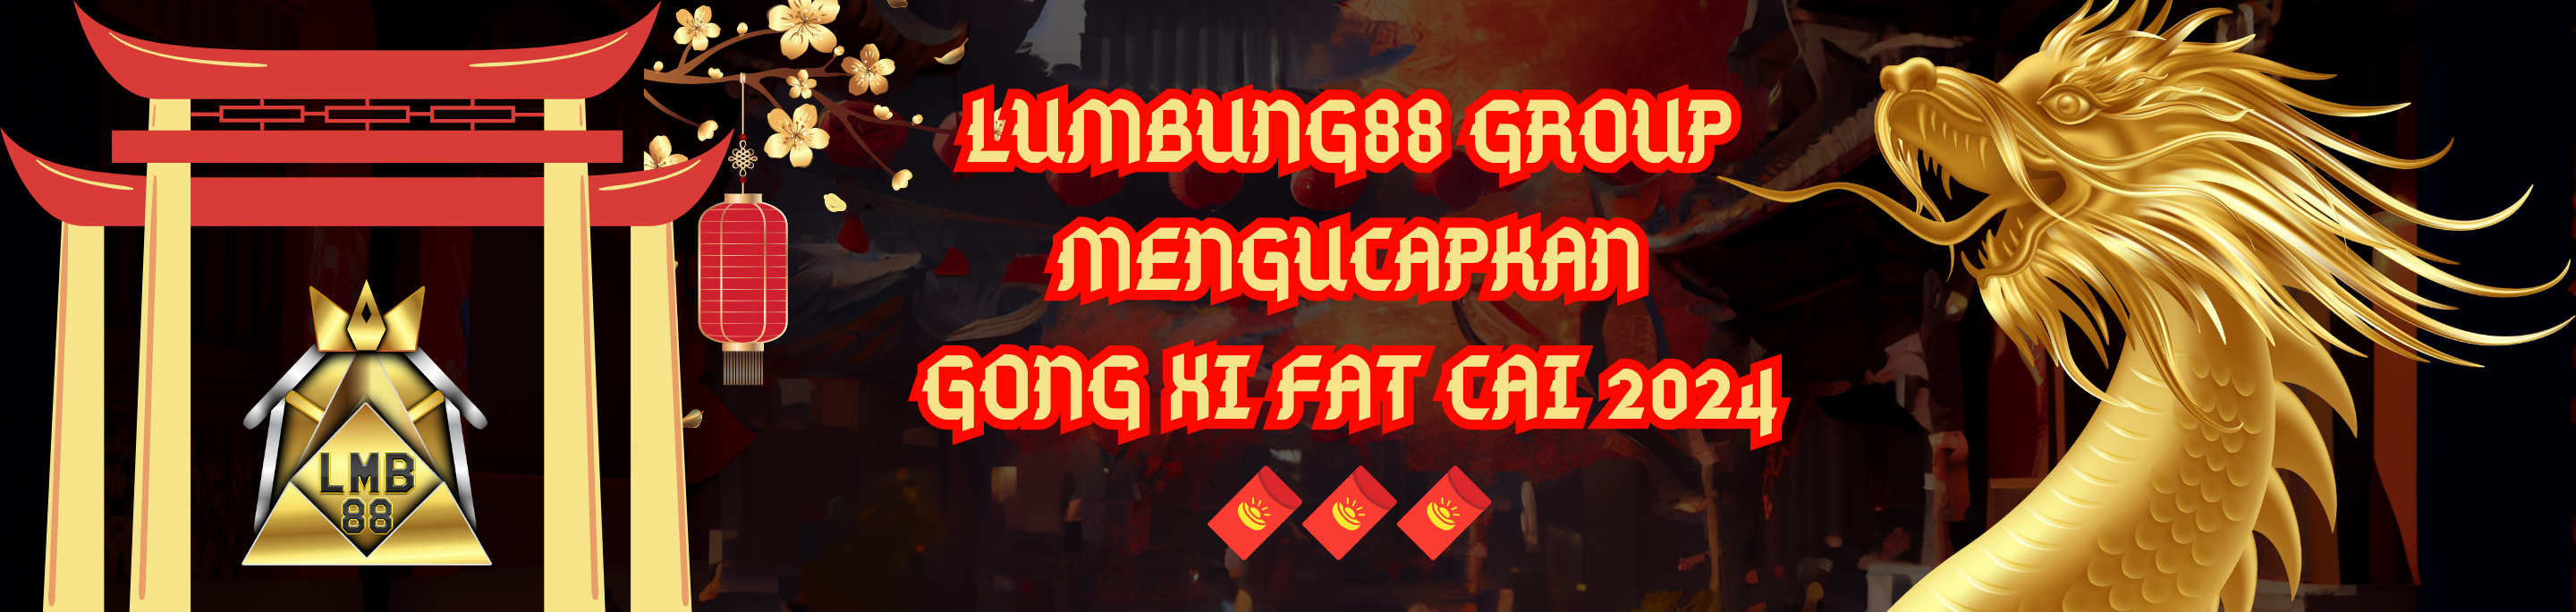 GONG XI FAT CAI 2024 - LMB88